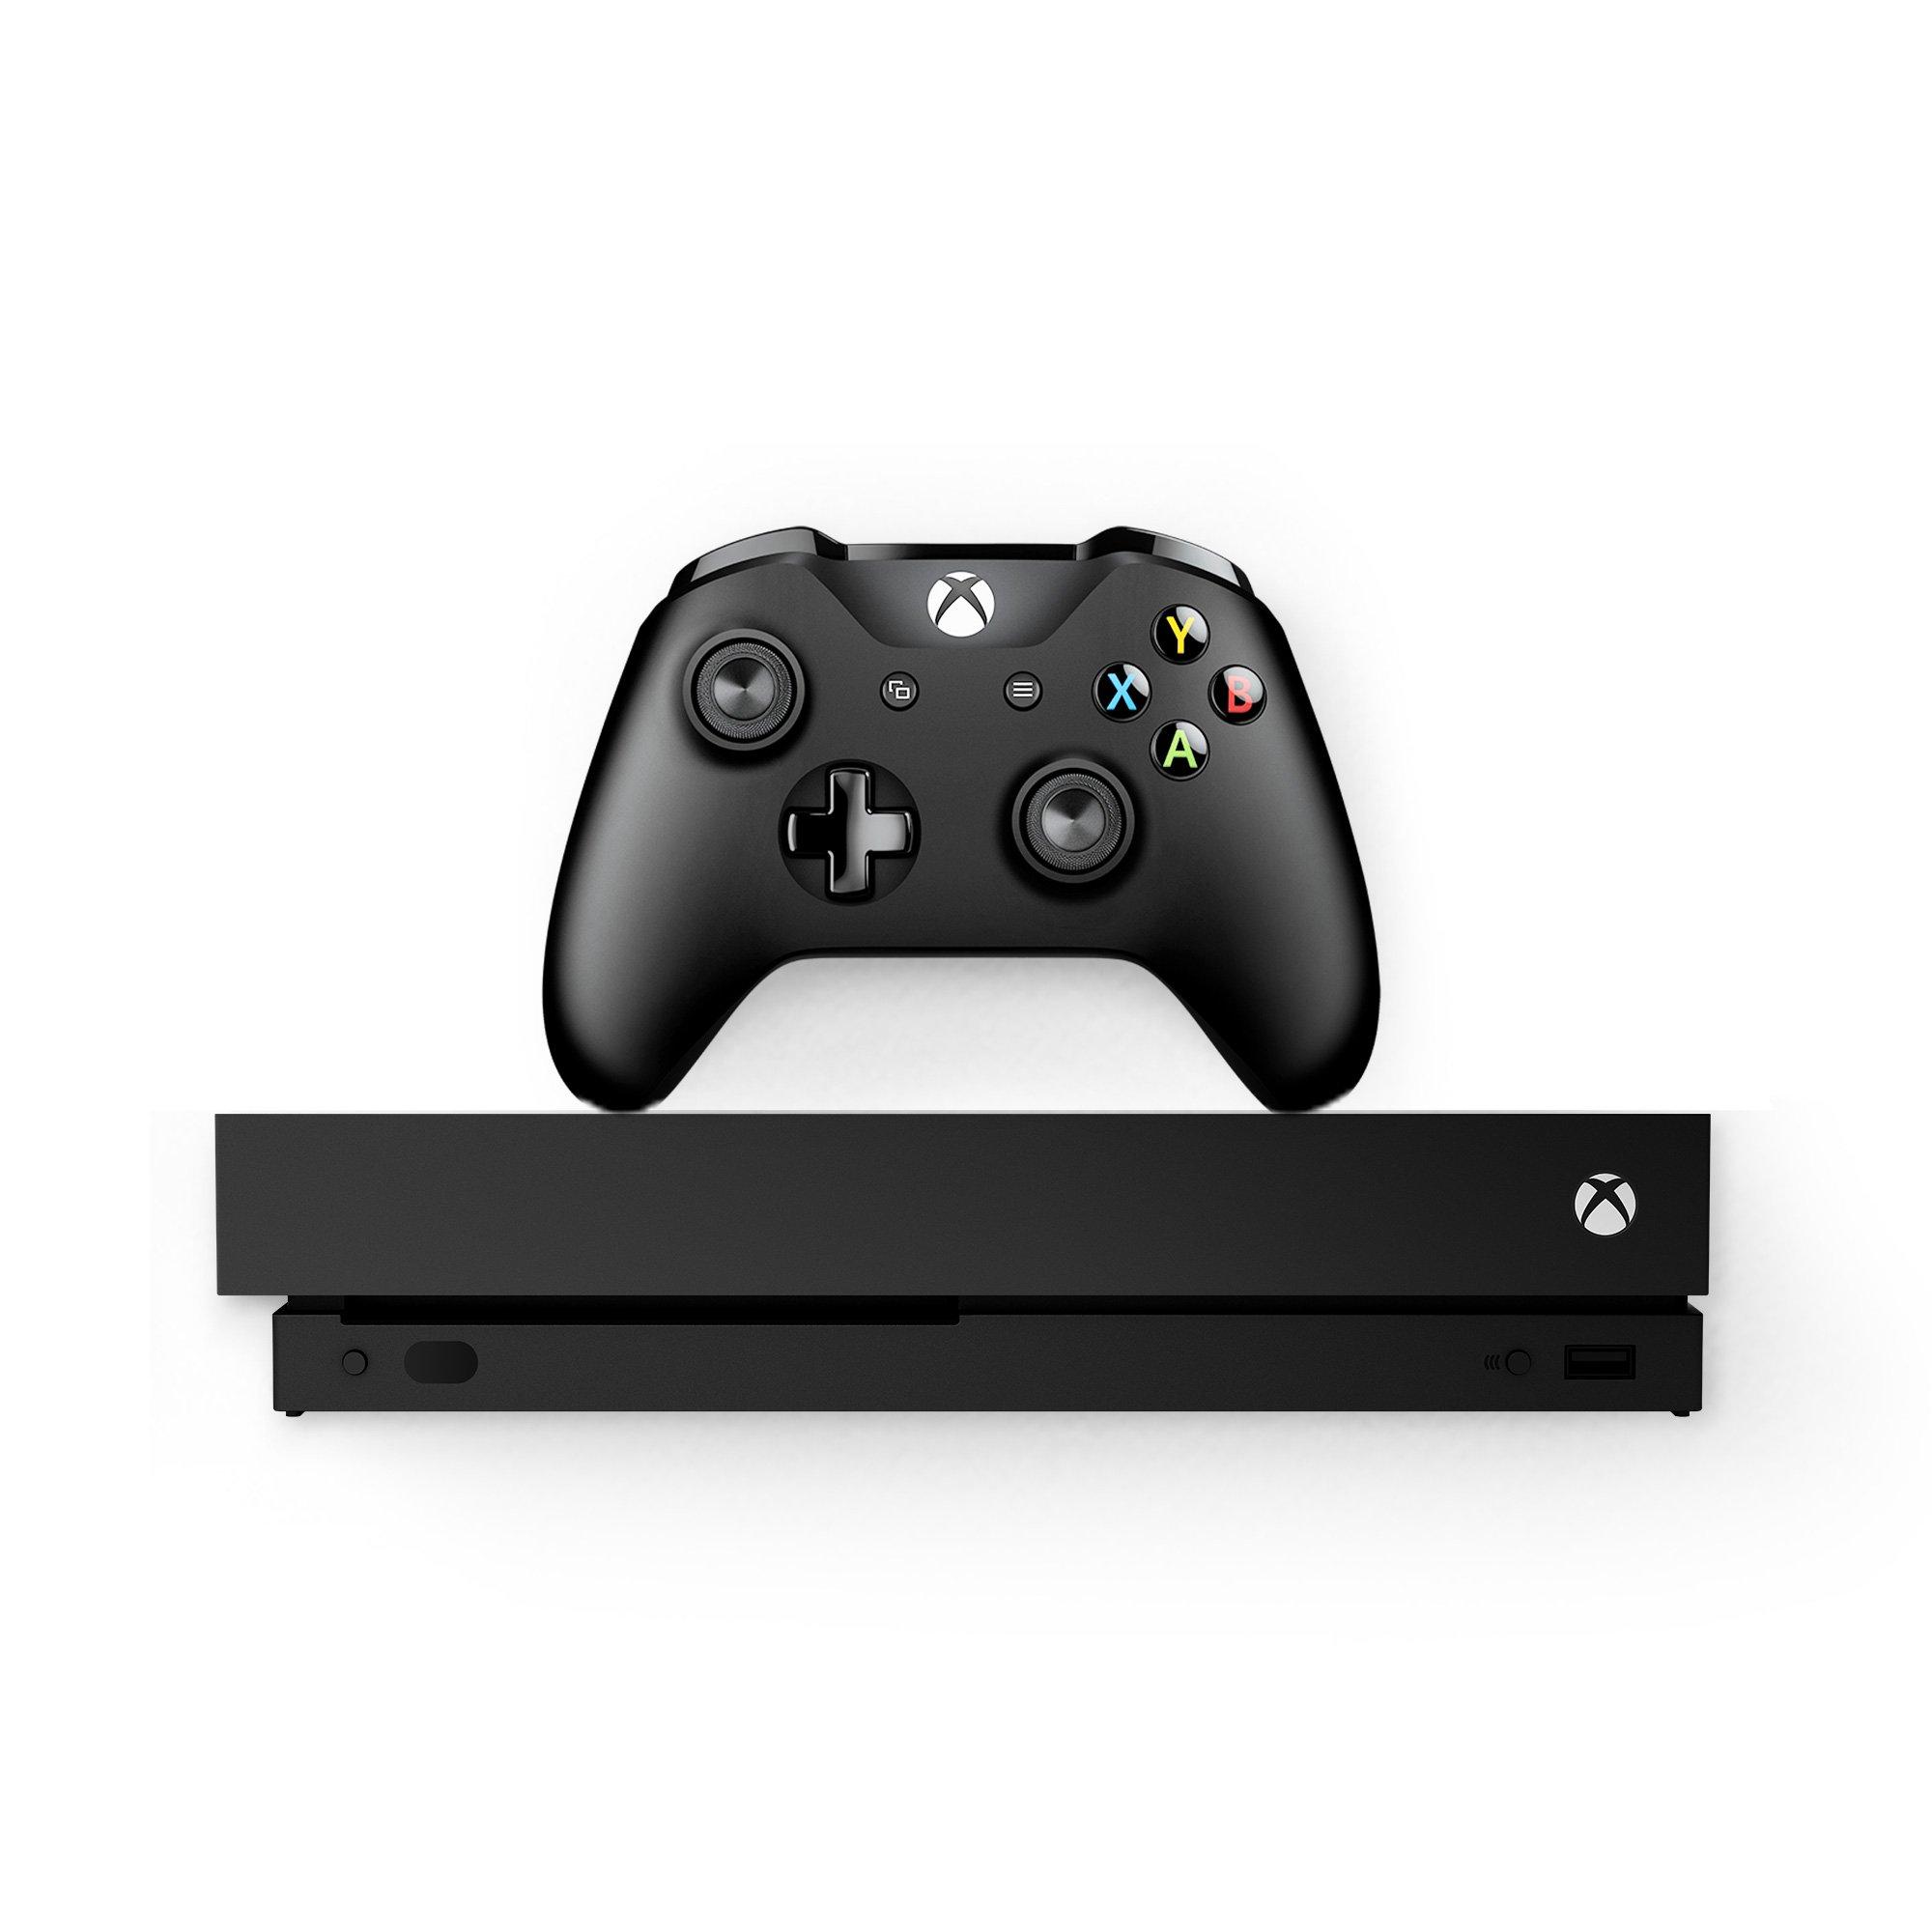 Koken Onderdompeling Compliment Microsoft Xbox One X 1TB Console Black | GameStop